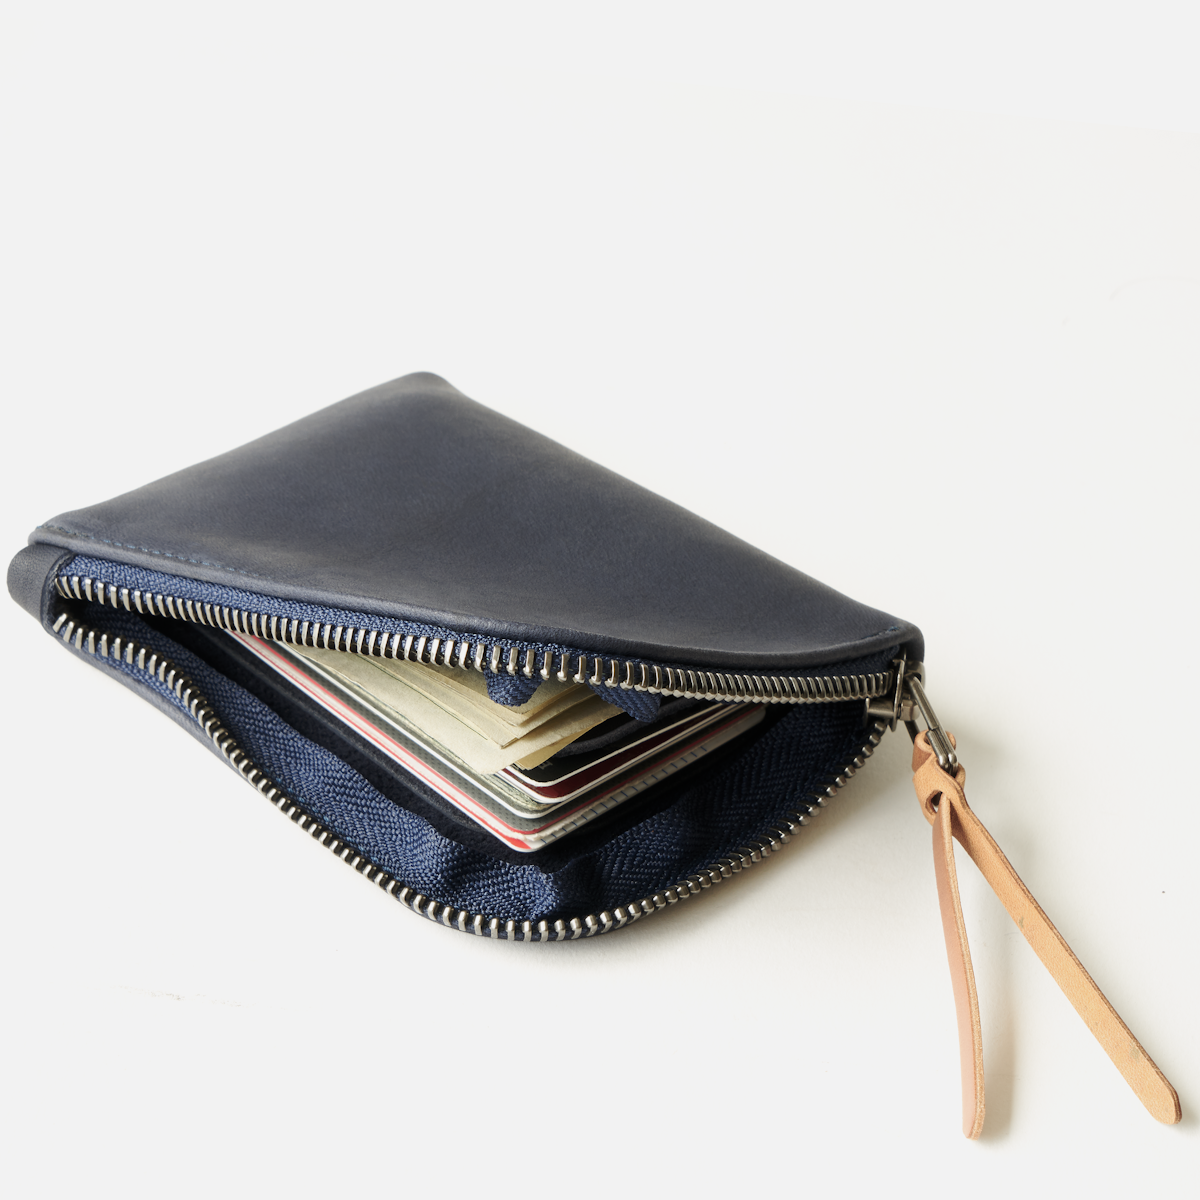 Luxe Zipper Wallet